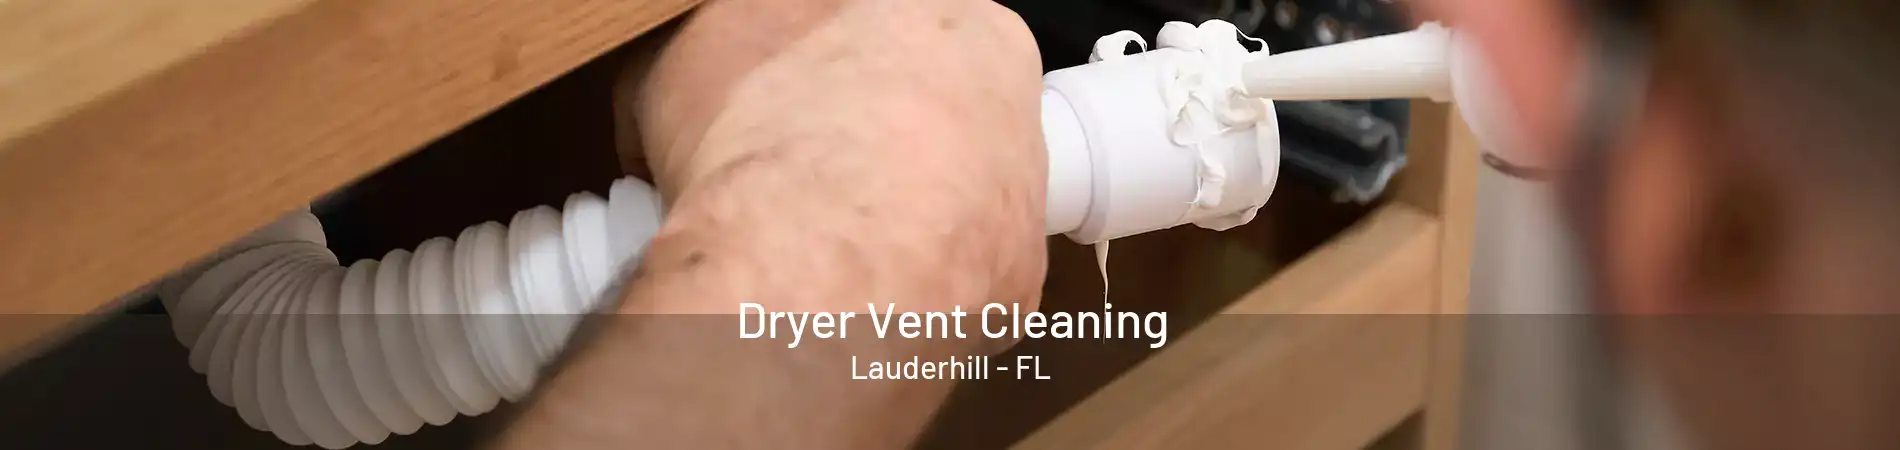 Dryer Vent Cleaning Lauderhill - FL